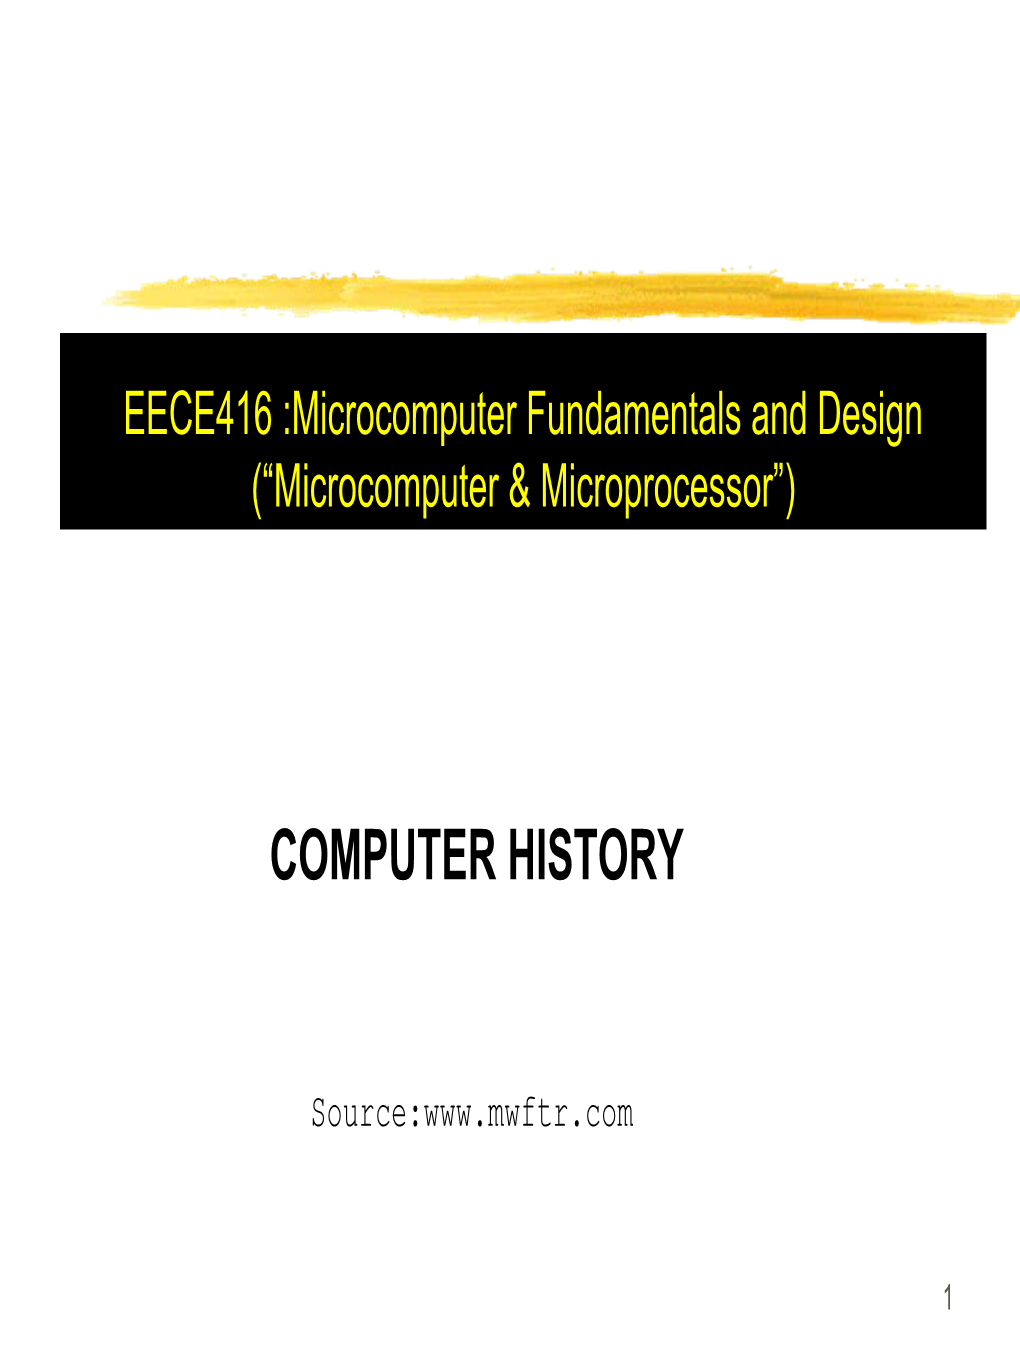 History of Microcomputer